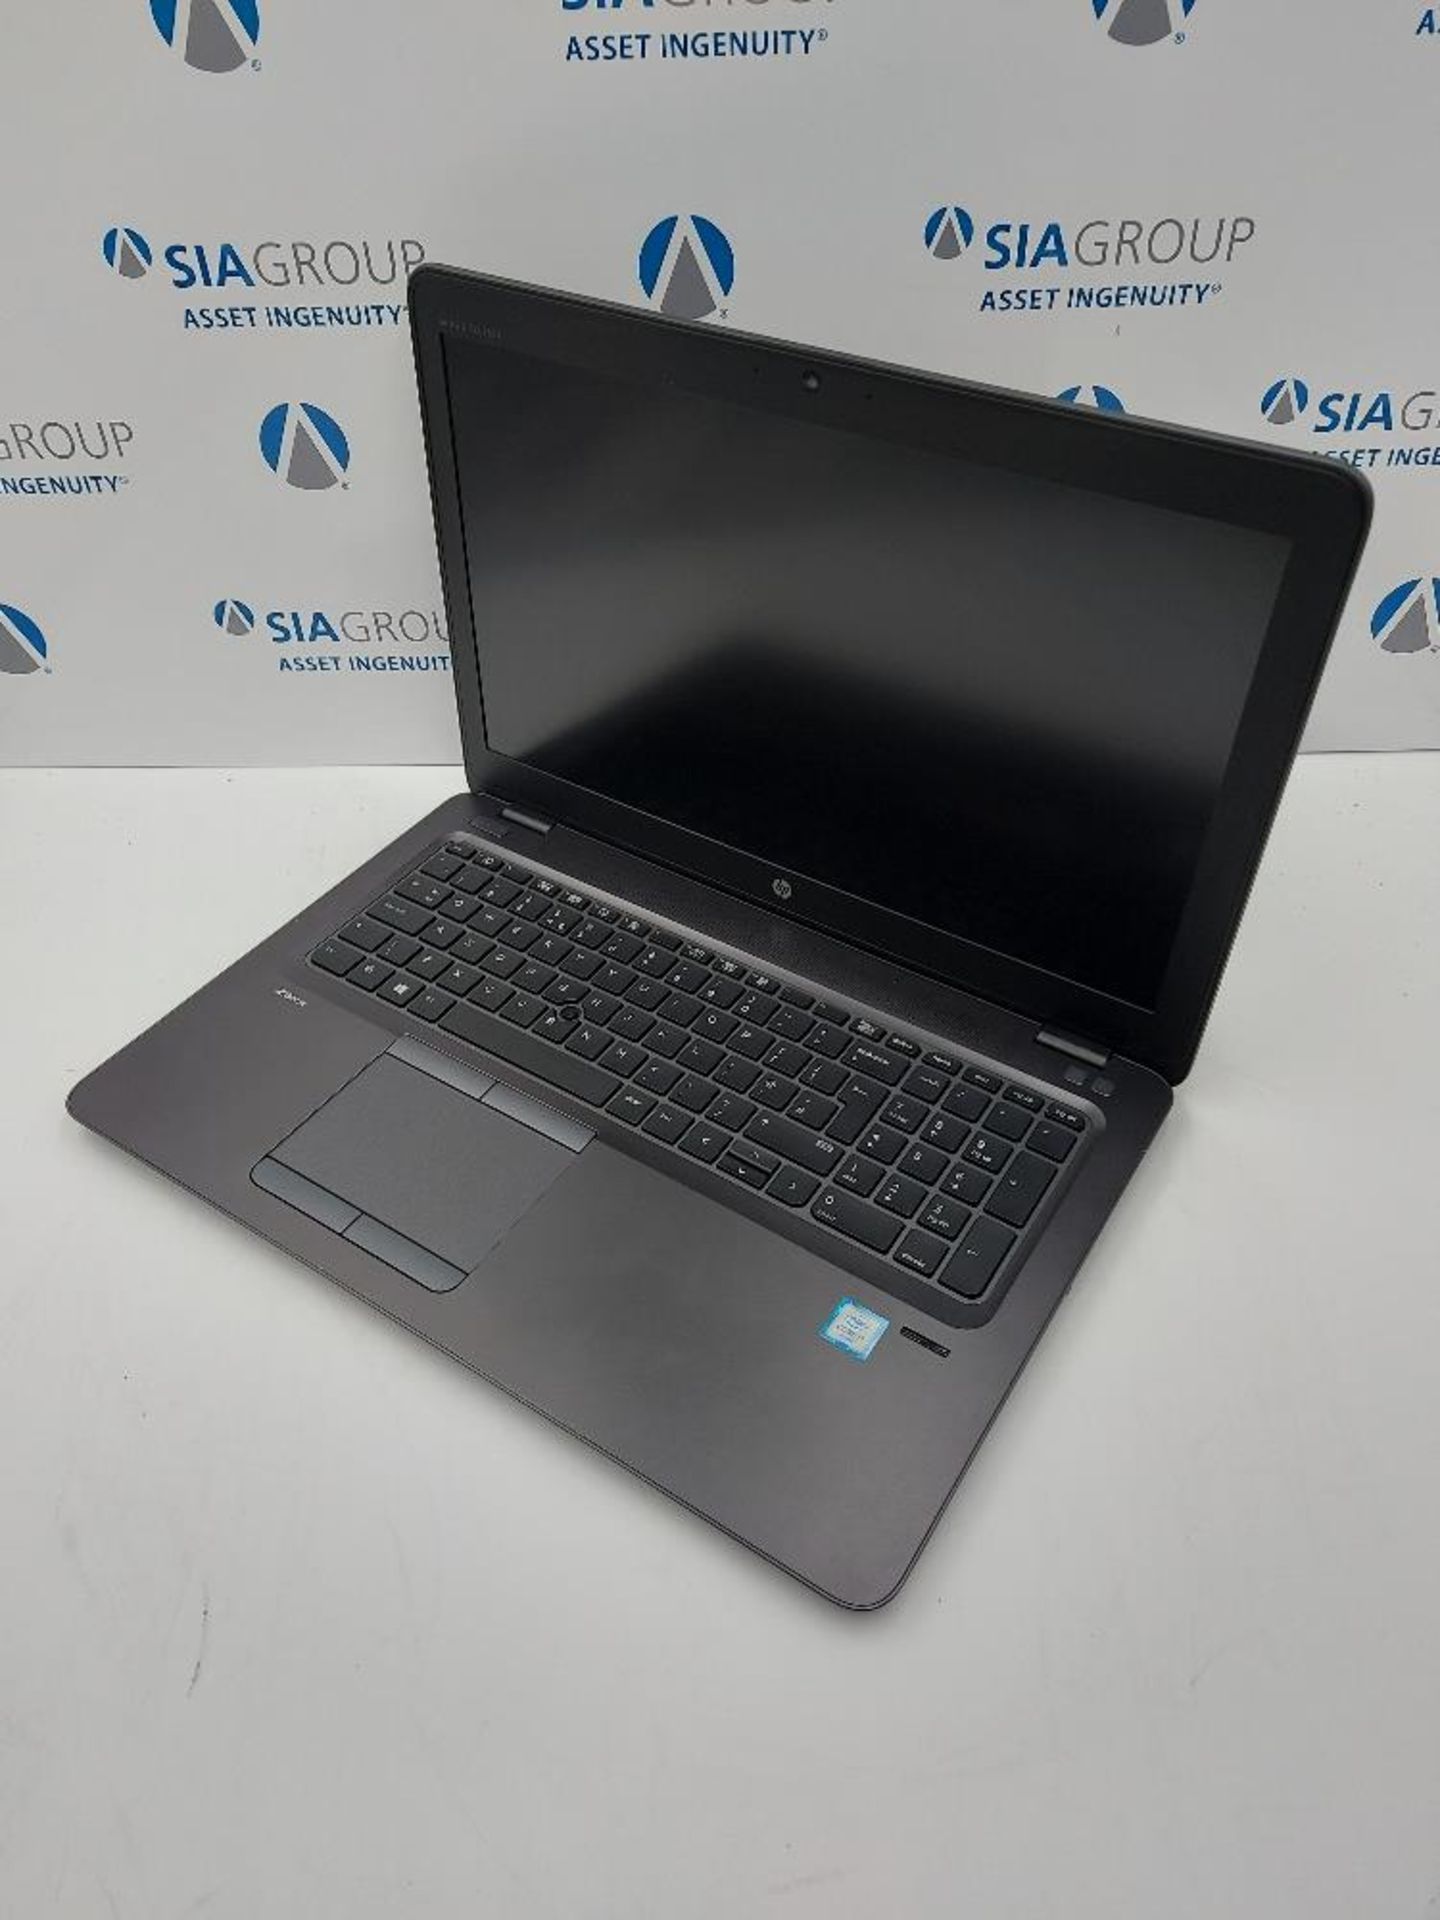 HP Zbook 15u G3 Laptop with Flight Case - Image 2 of 12